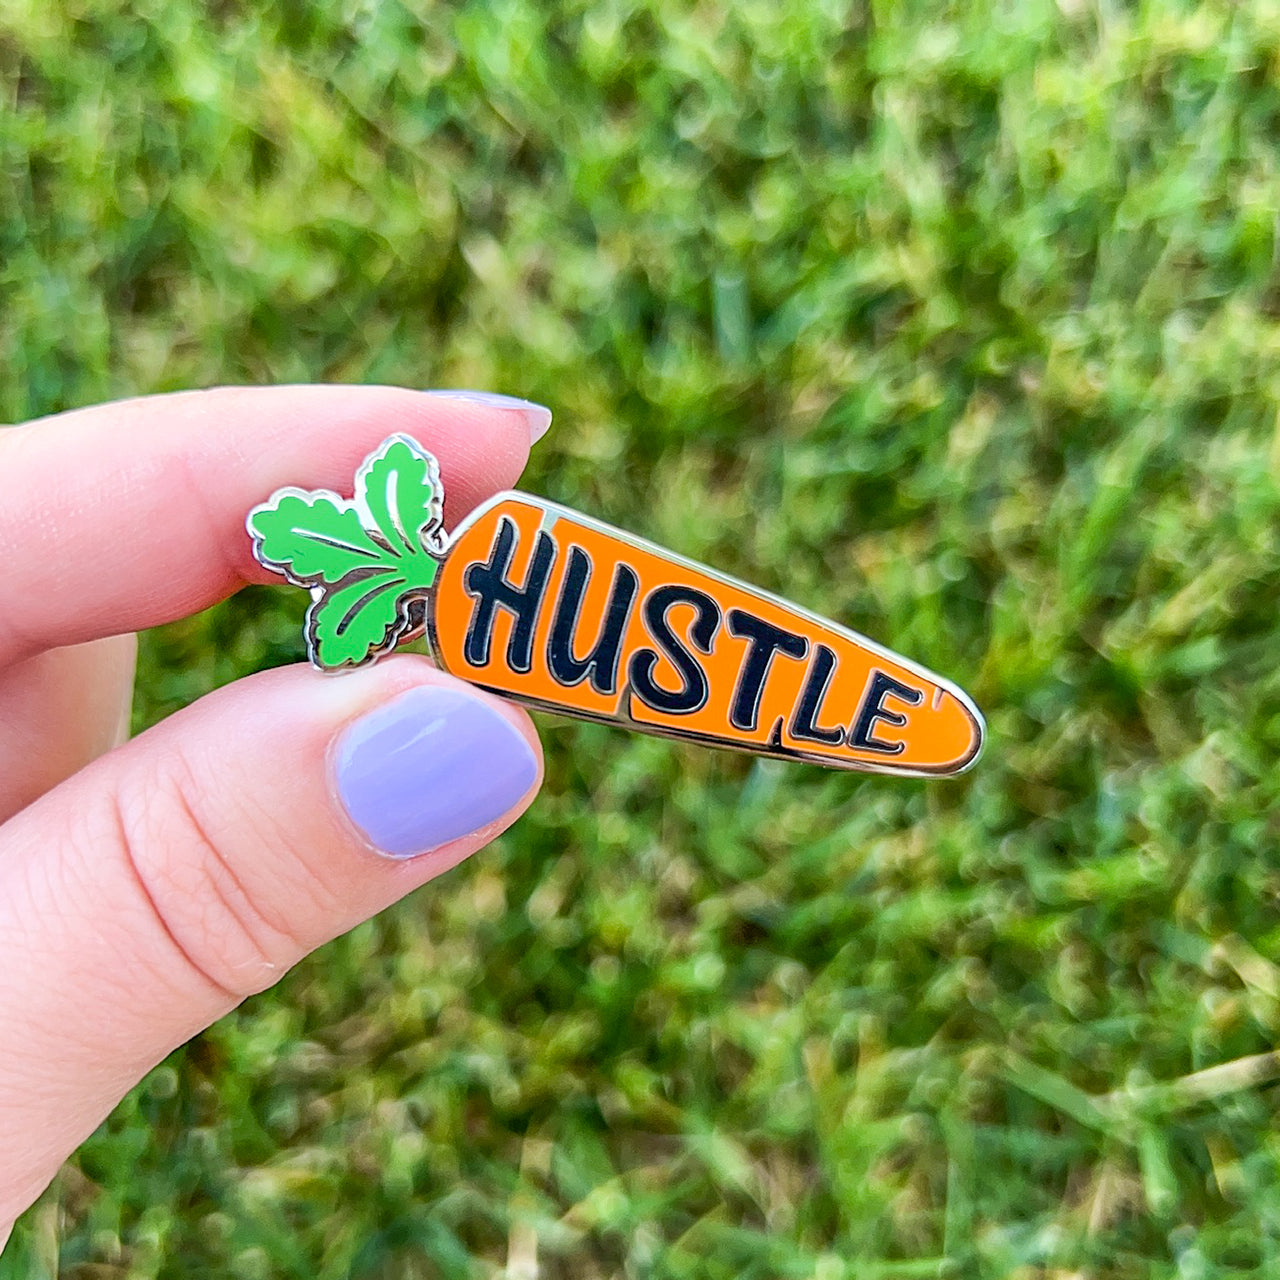 Hustle Pin